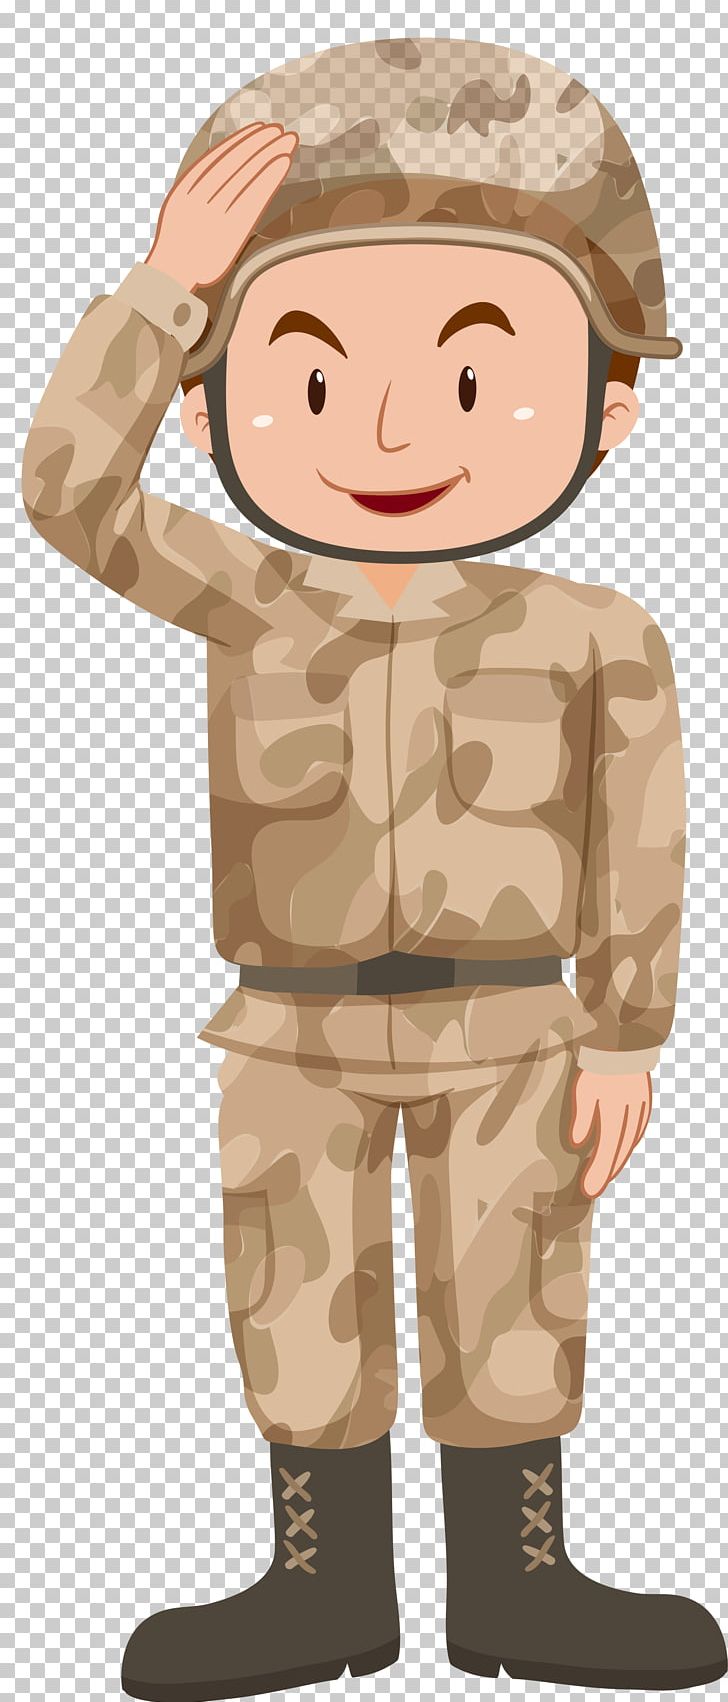 Army Soldier Cartoon - Army Military